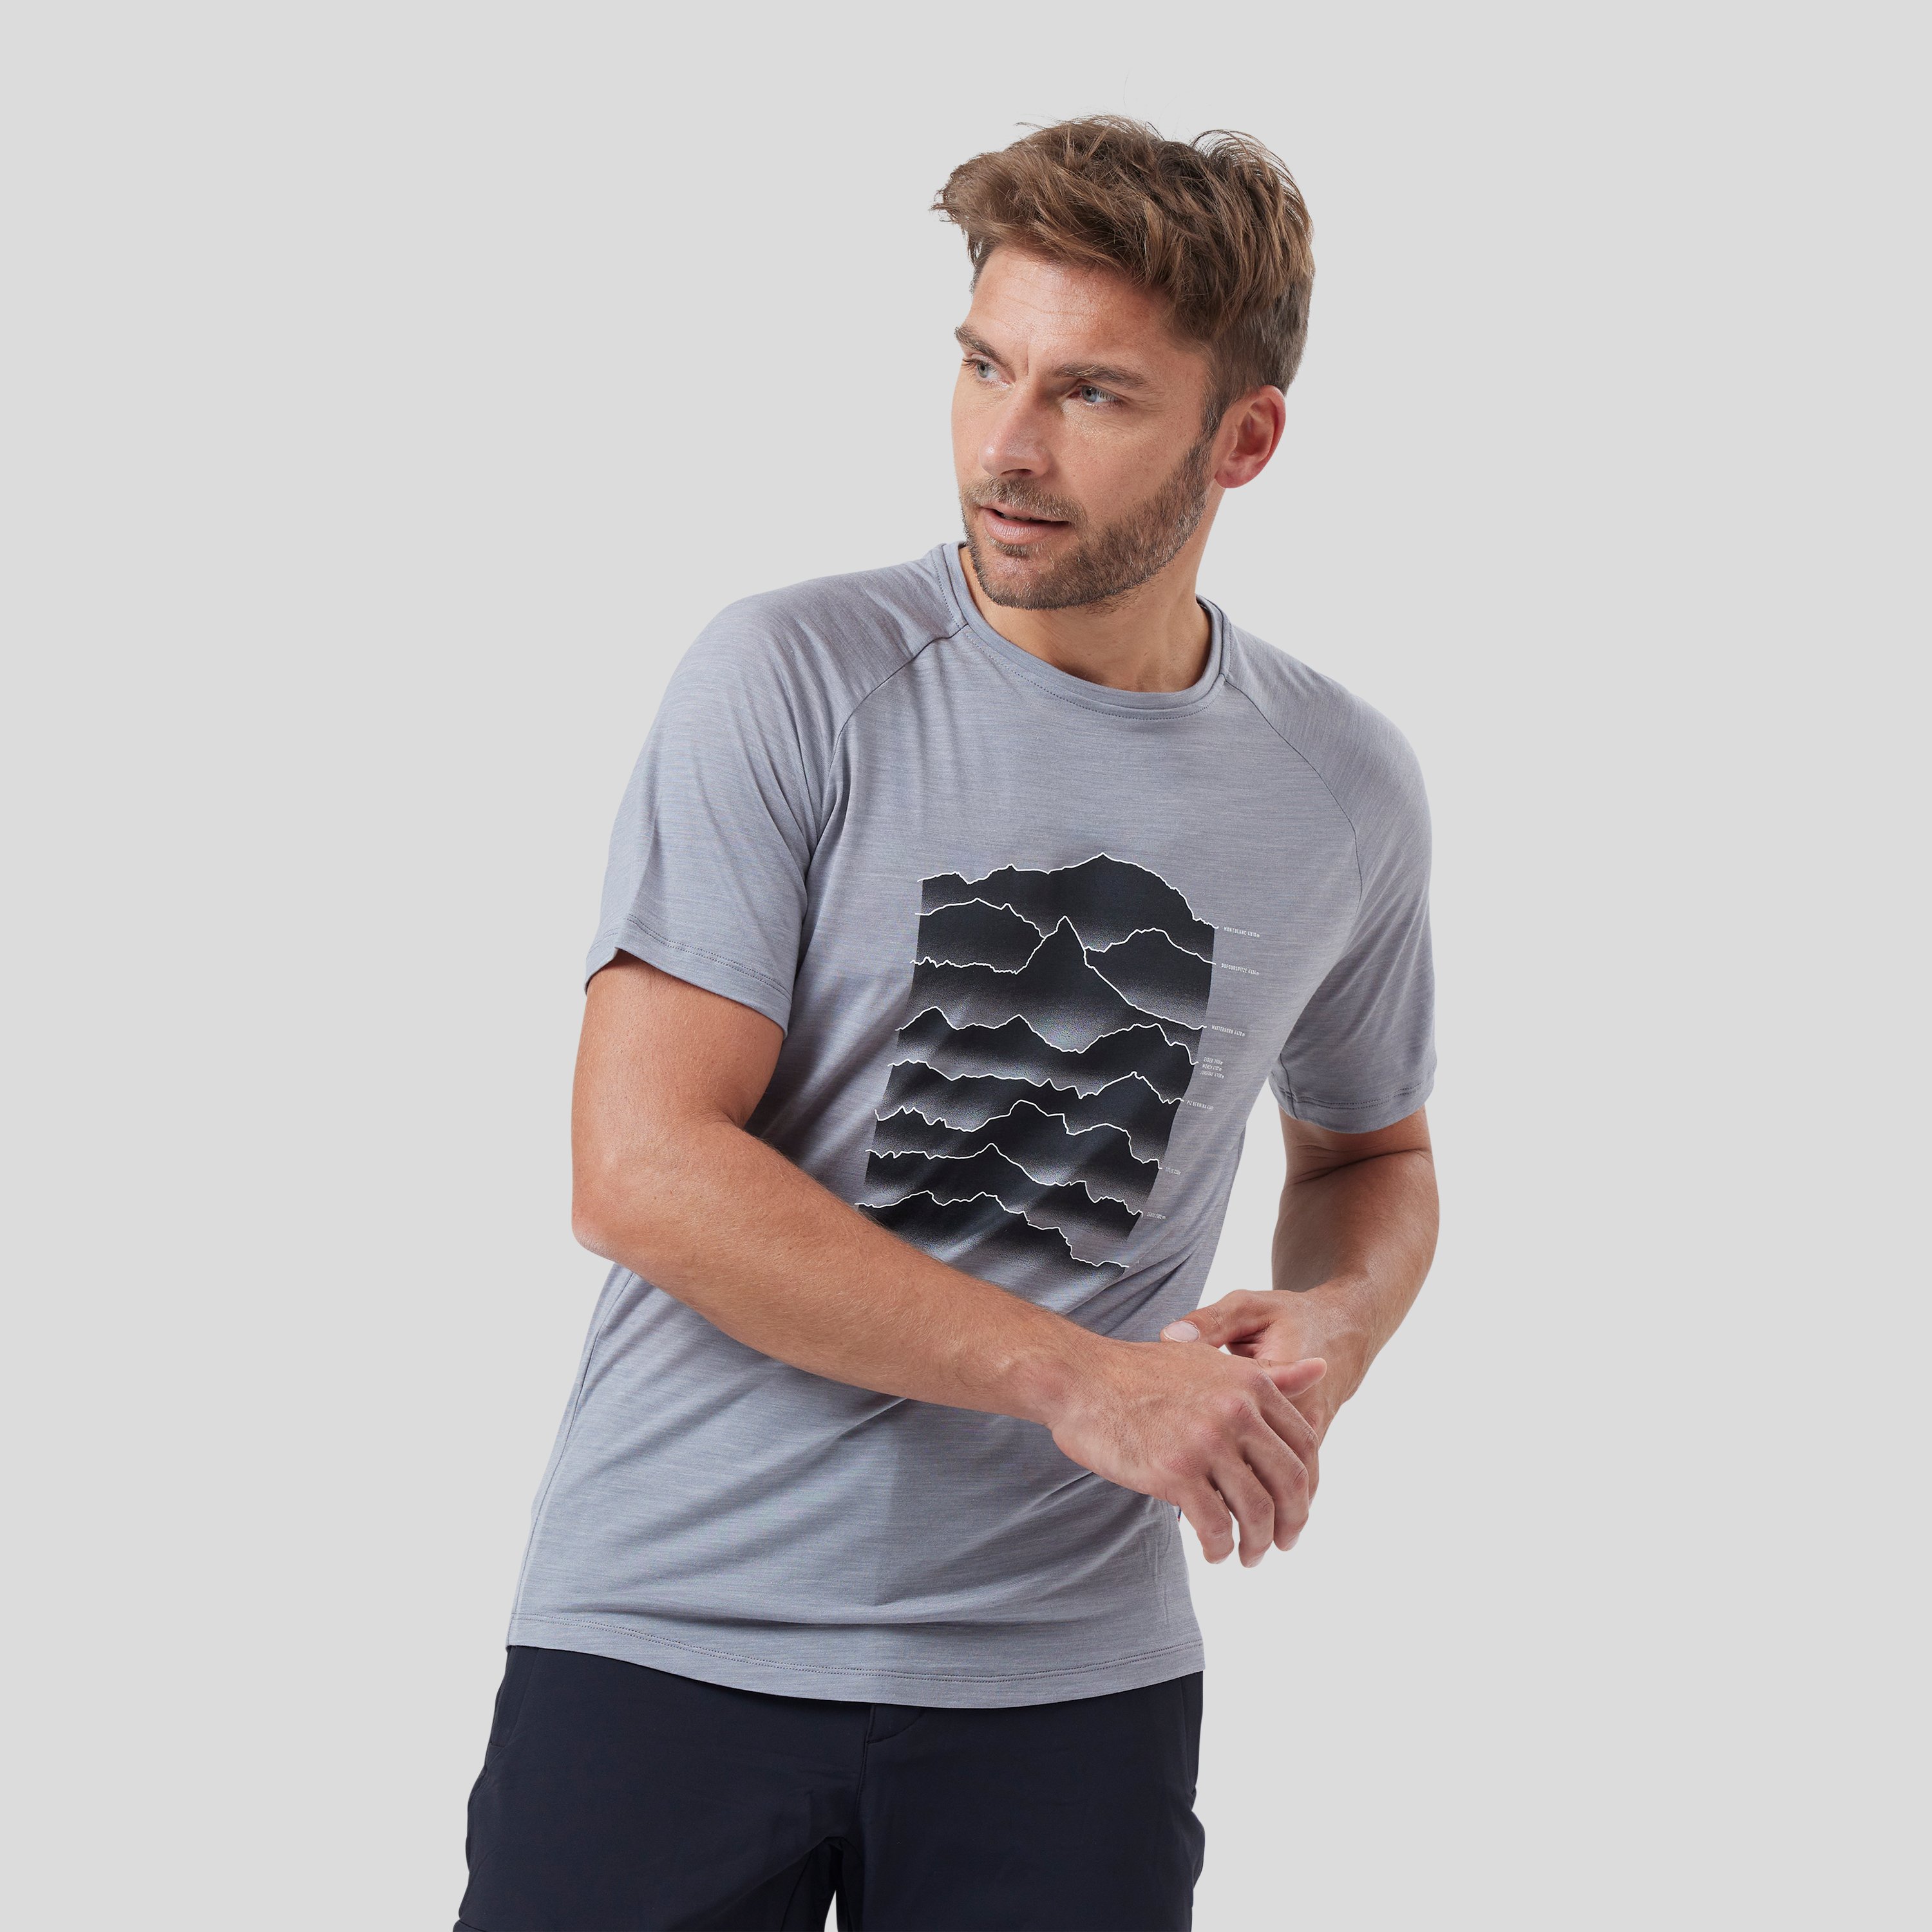 ODLO Ascent Performance Wool Light T-Shirt mit Sonnenaufgangsmotiv für Herren, XXL, grau